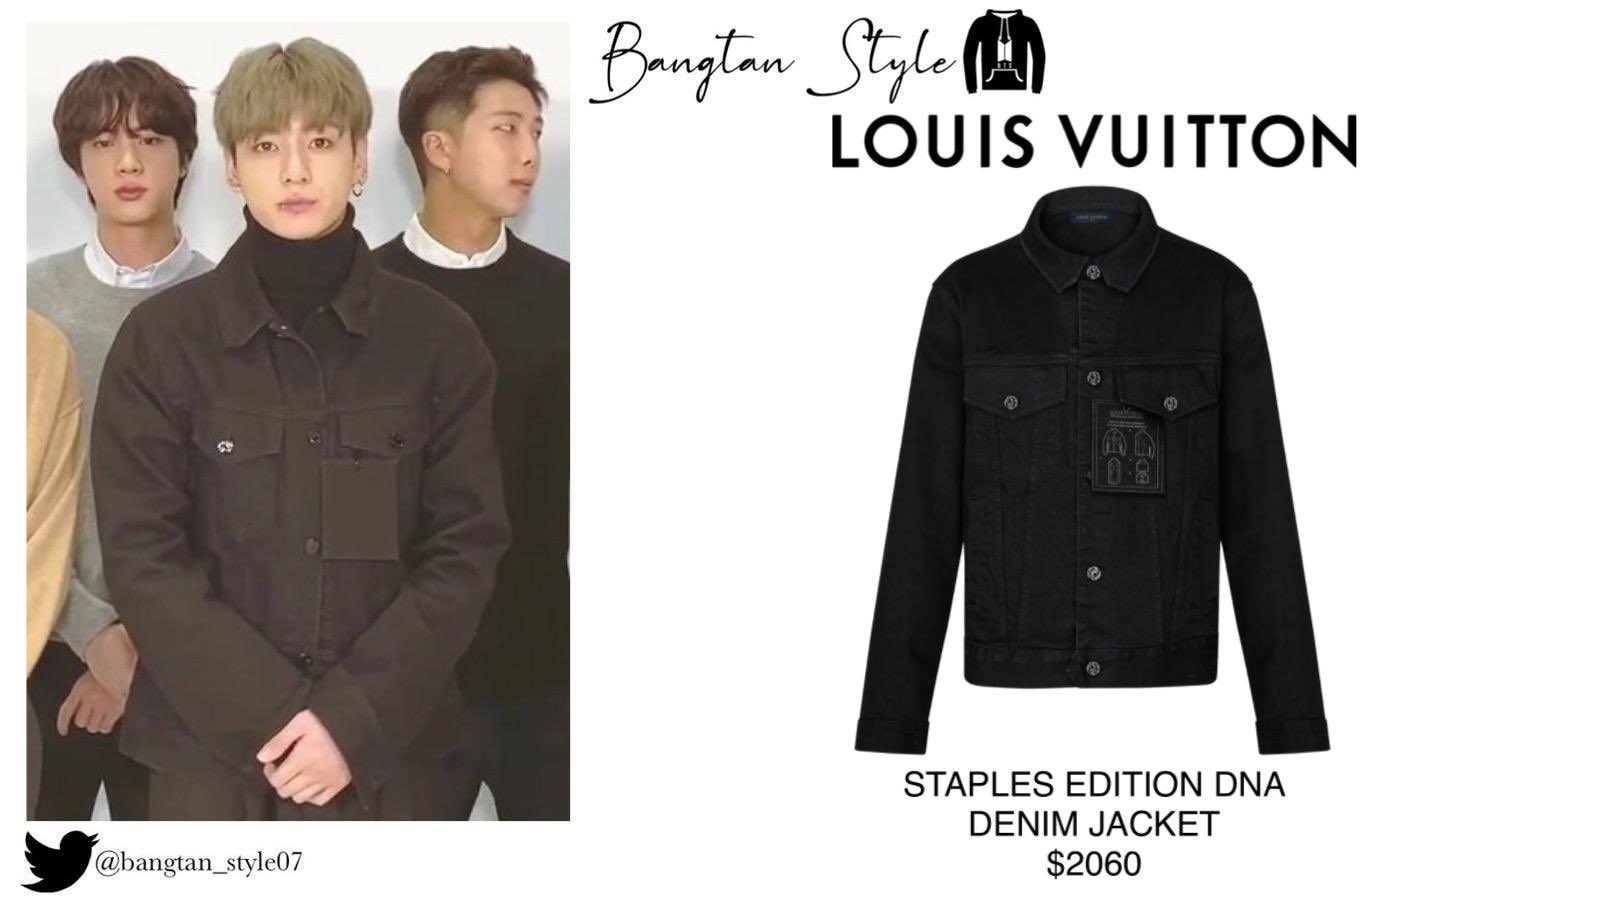 Louis Vuitton Staples Edition DNA Denim Jacket